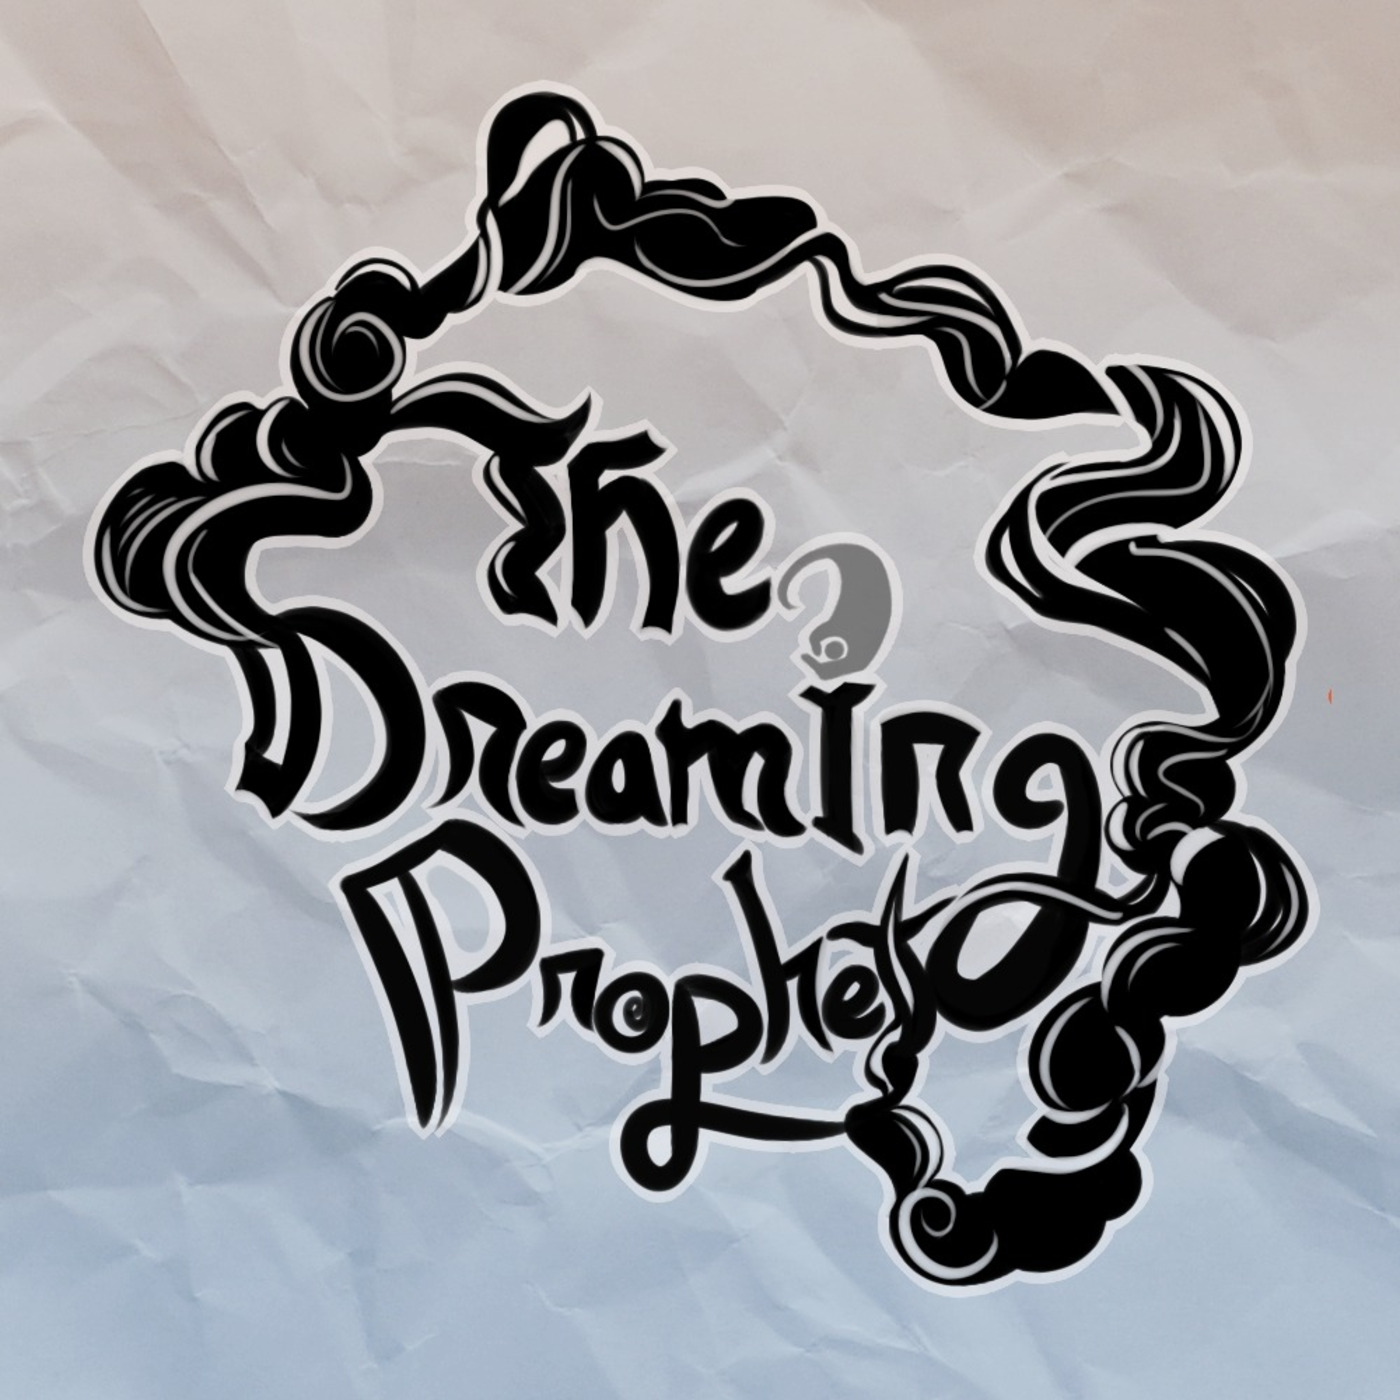 The Dreaming Prophet